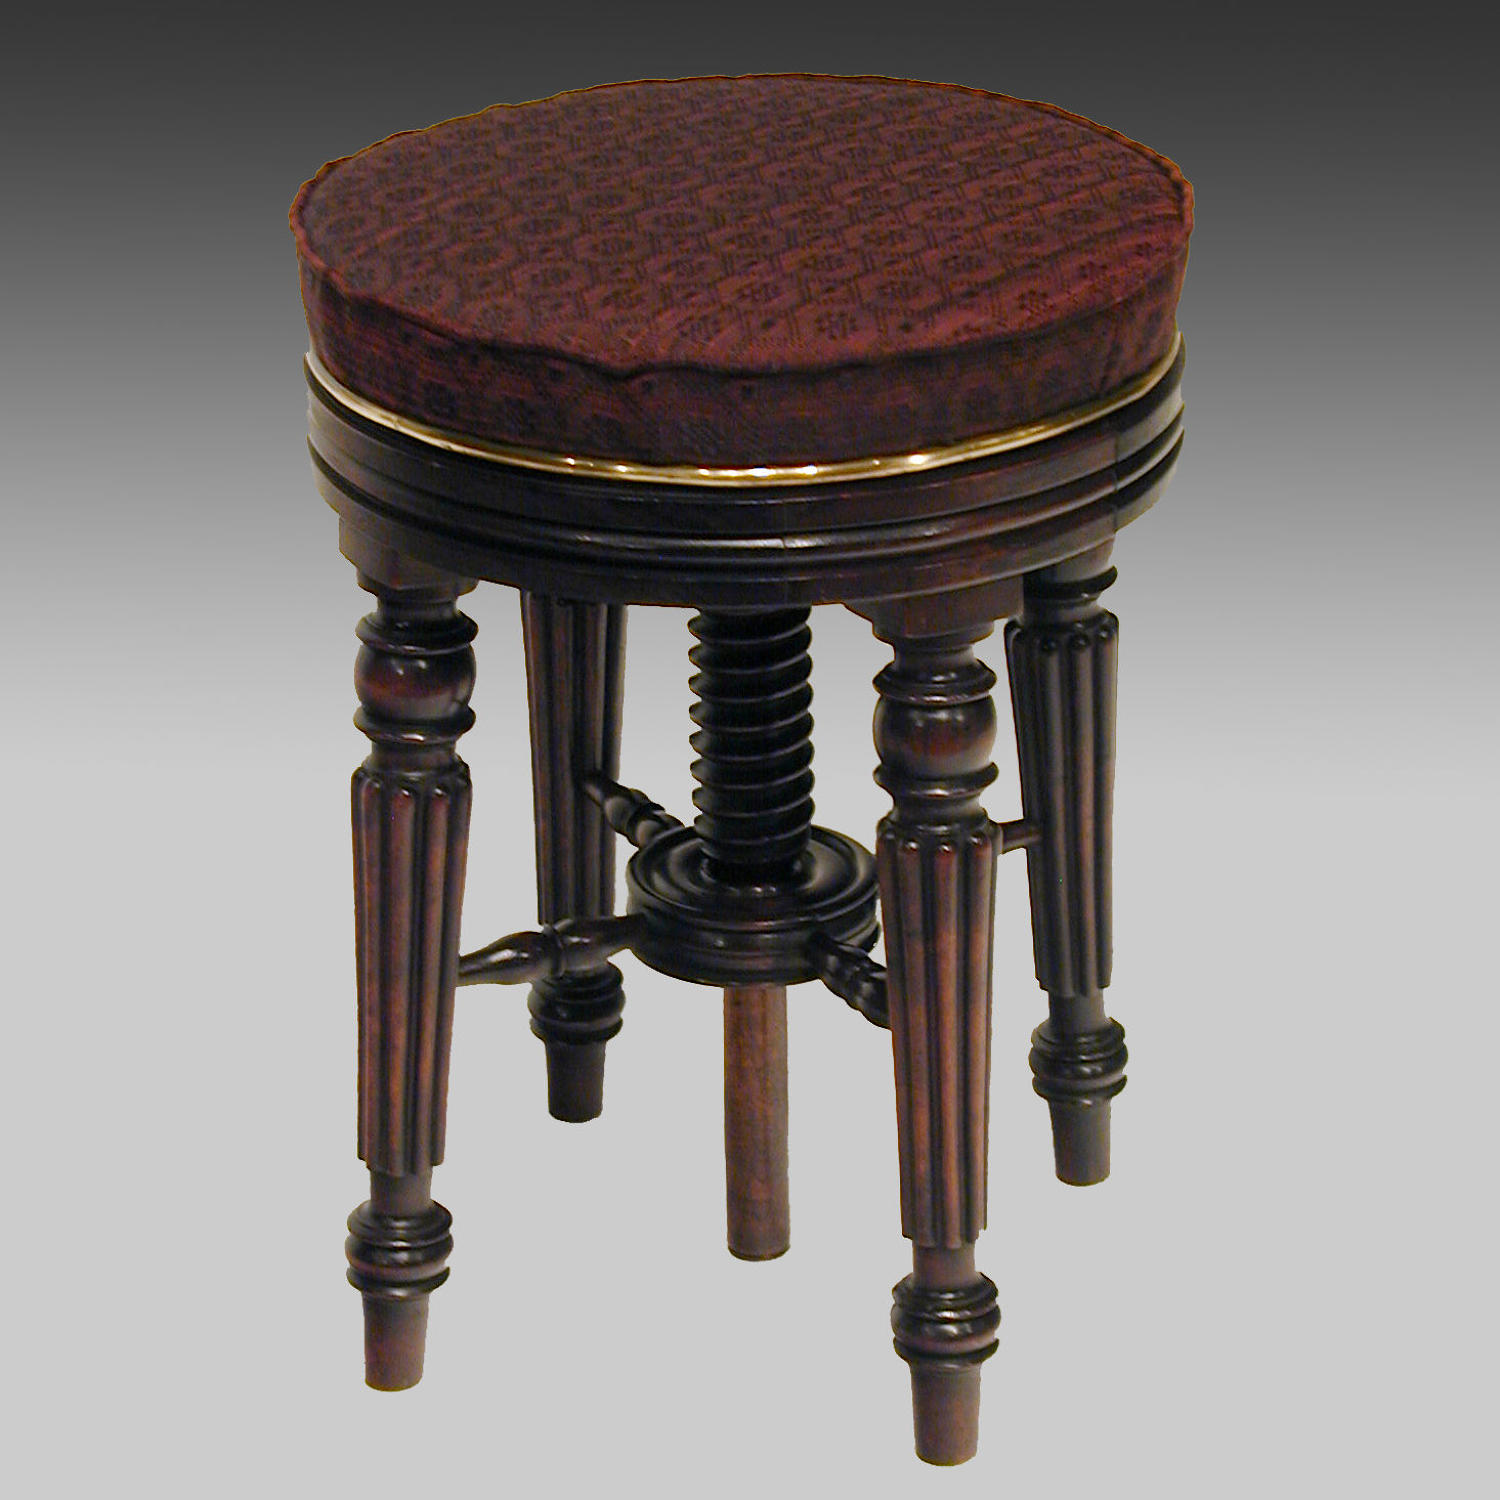 Antique Regency rosewood music stool